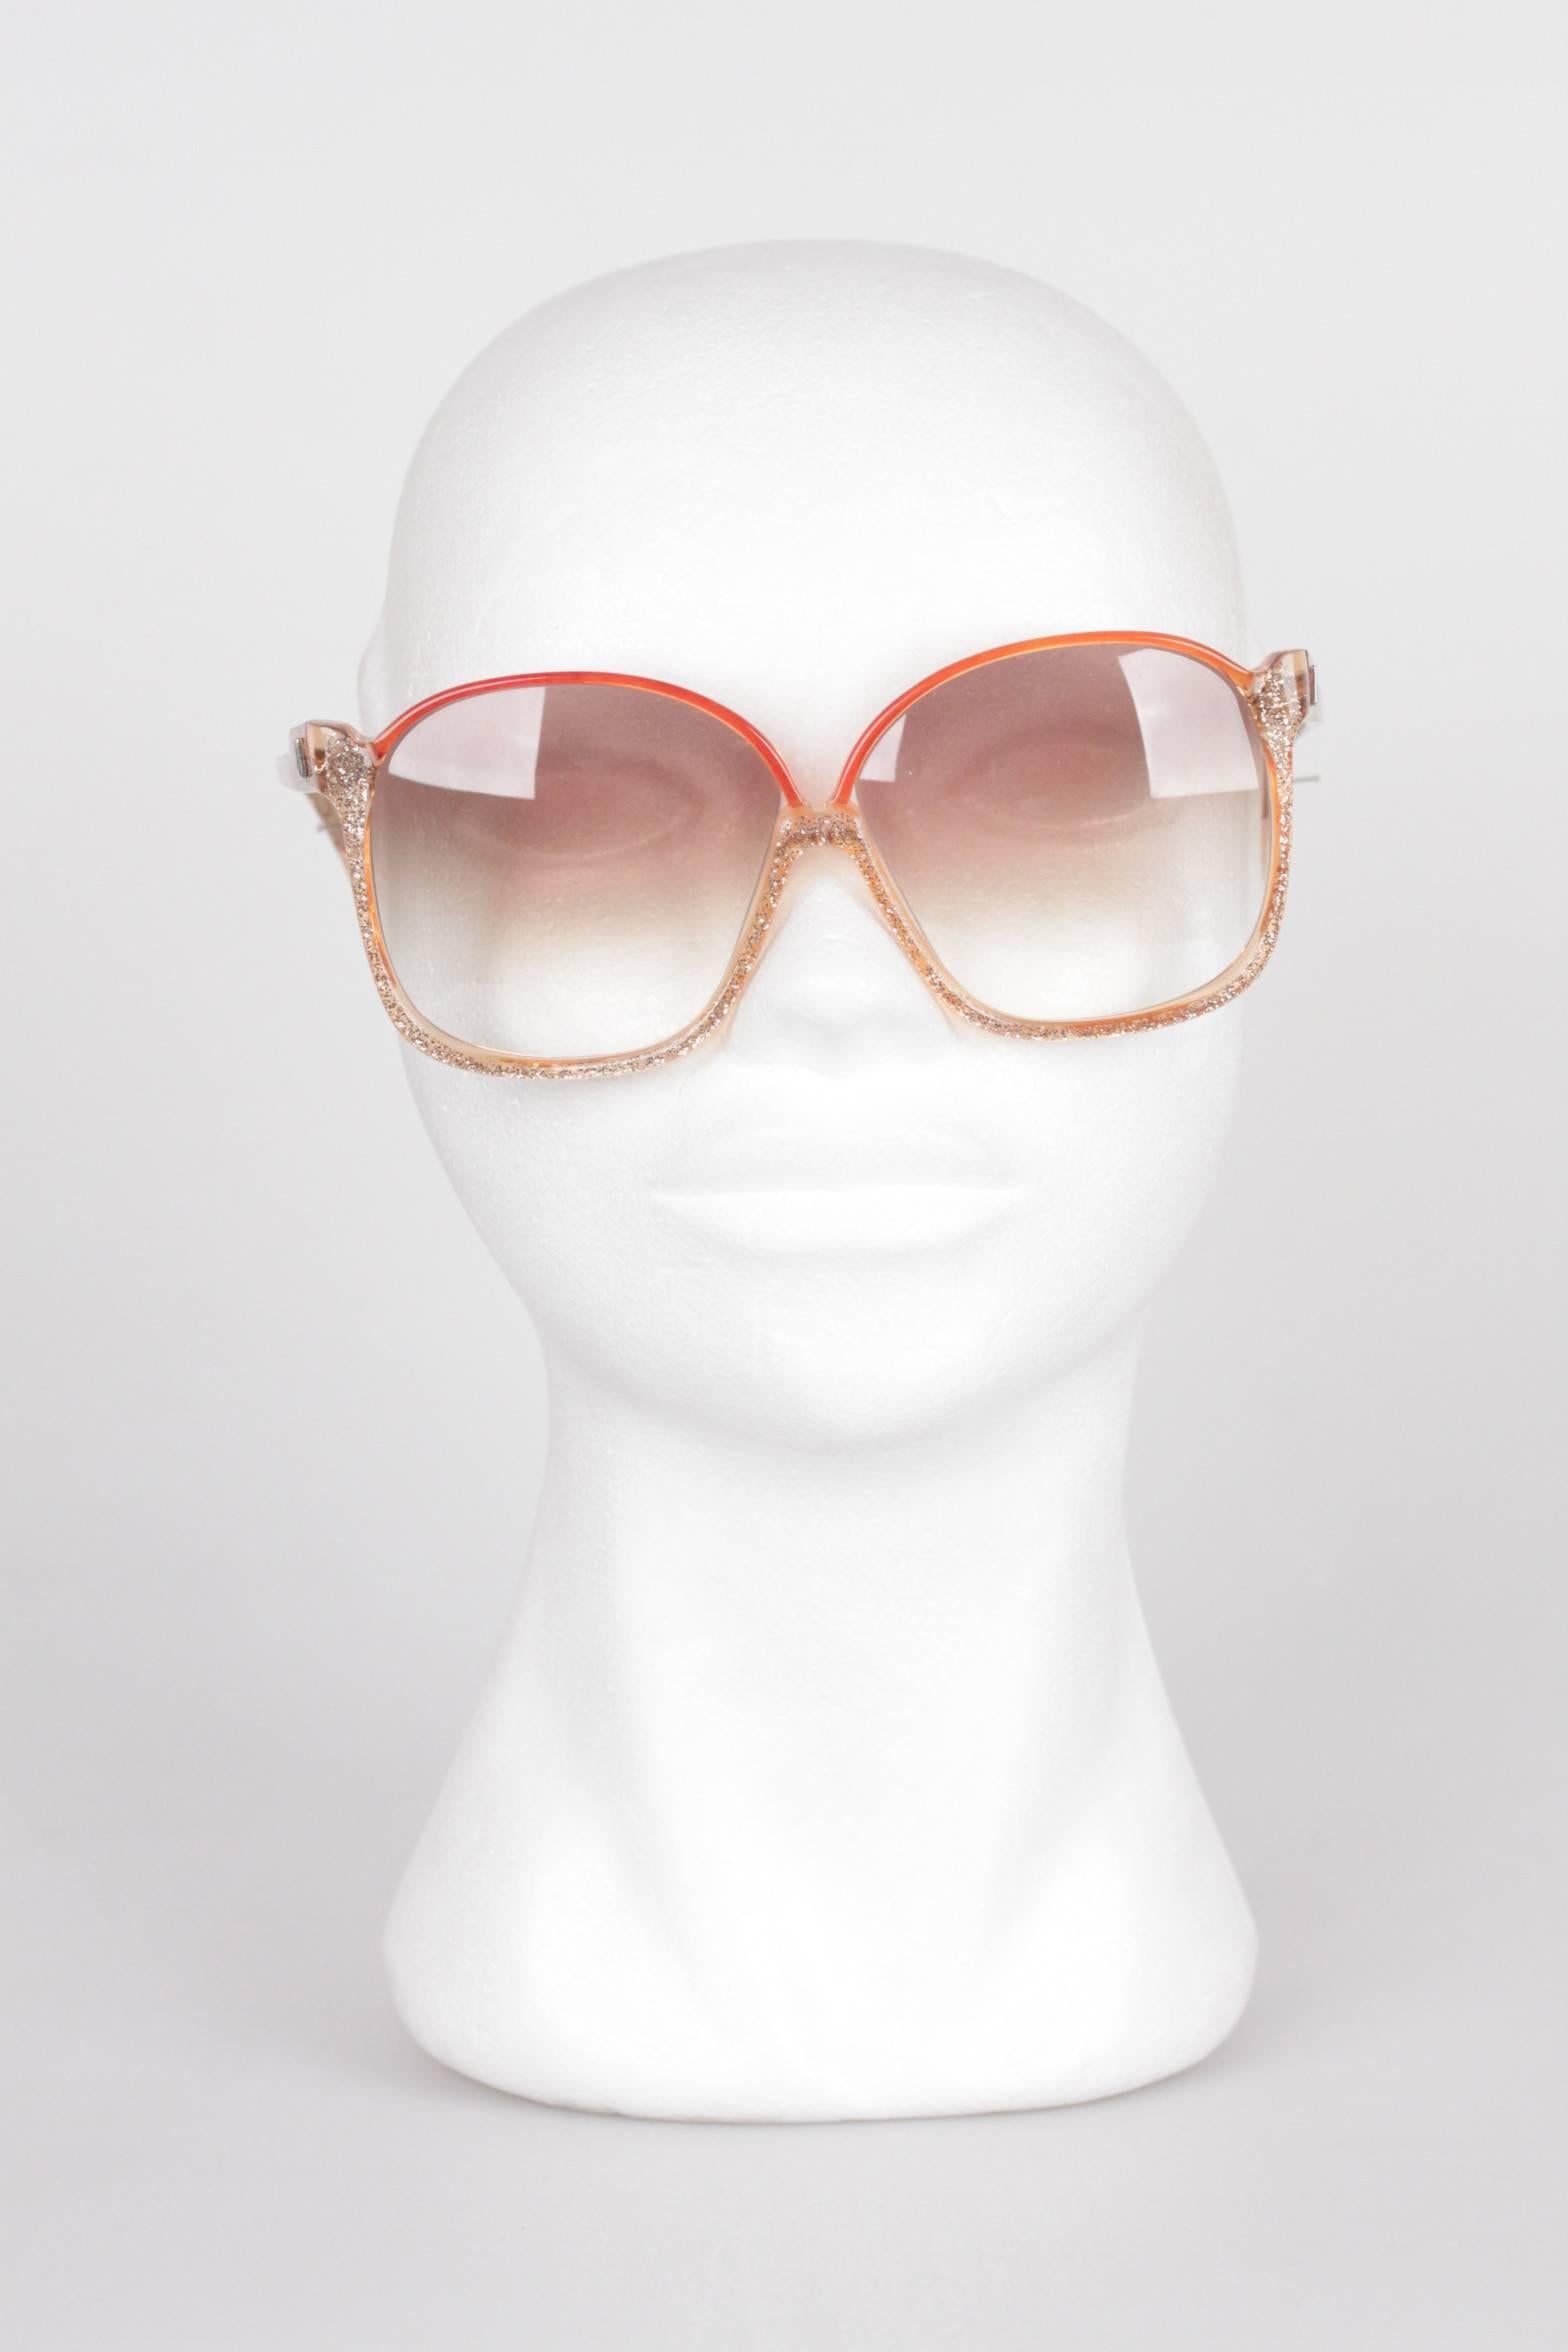 J JOURDAN Paris Vintage OVERSIZED Glitter RED Sunglasses US3 196 60mm 3